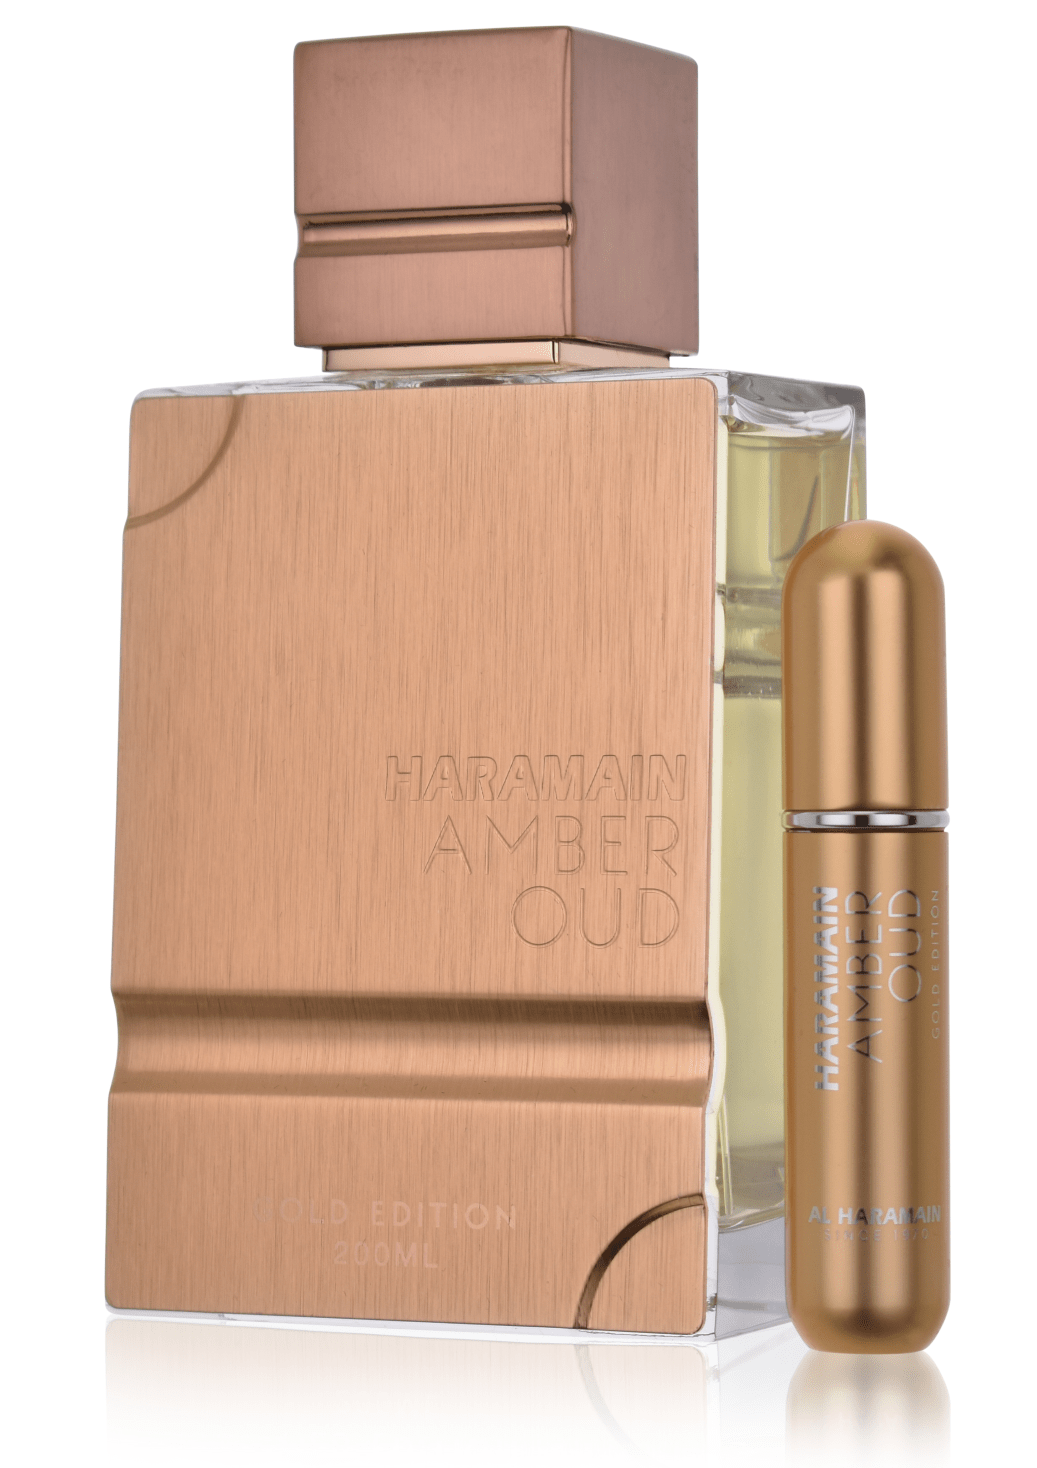 Al Haramain Amber Oud Gold Edition 200 ml Eau de Parfum         